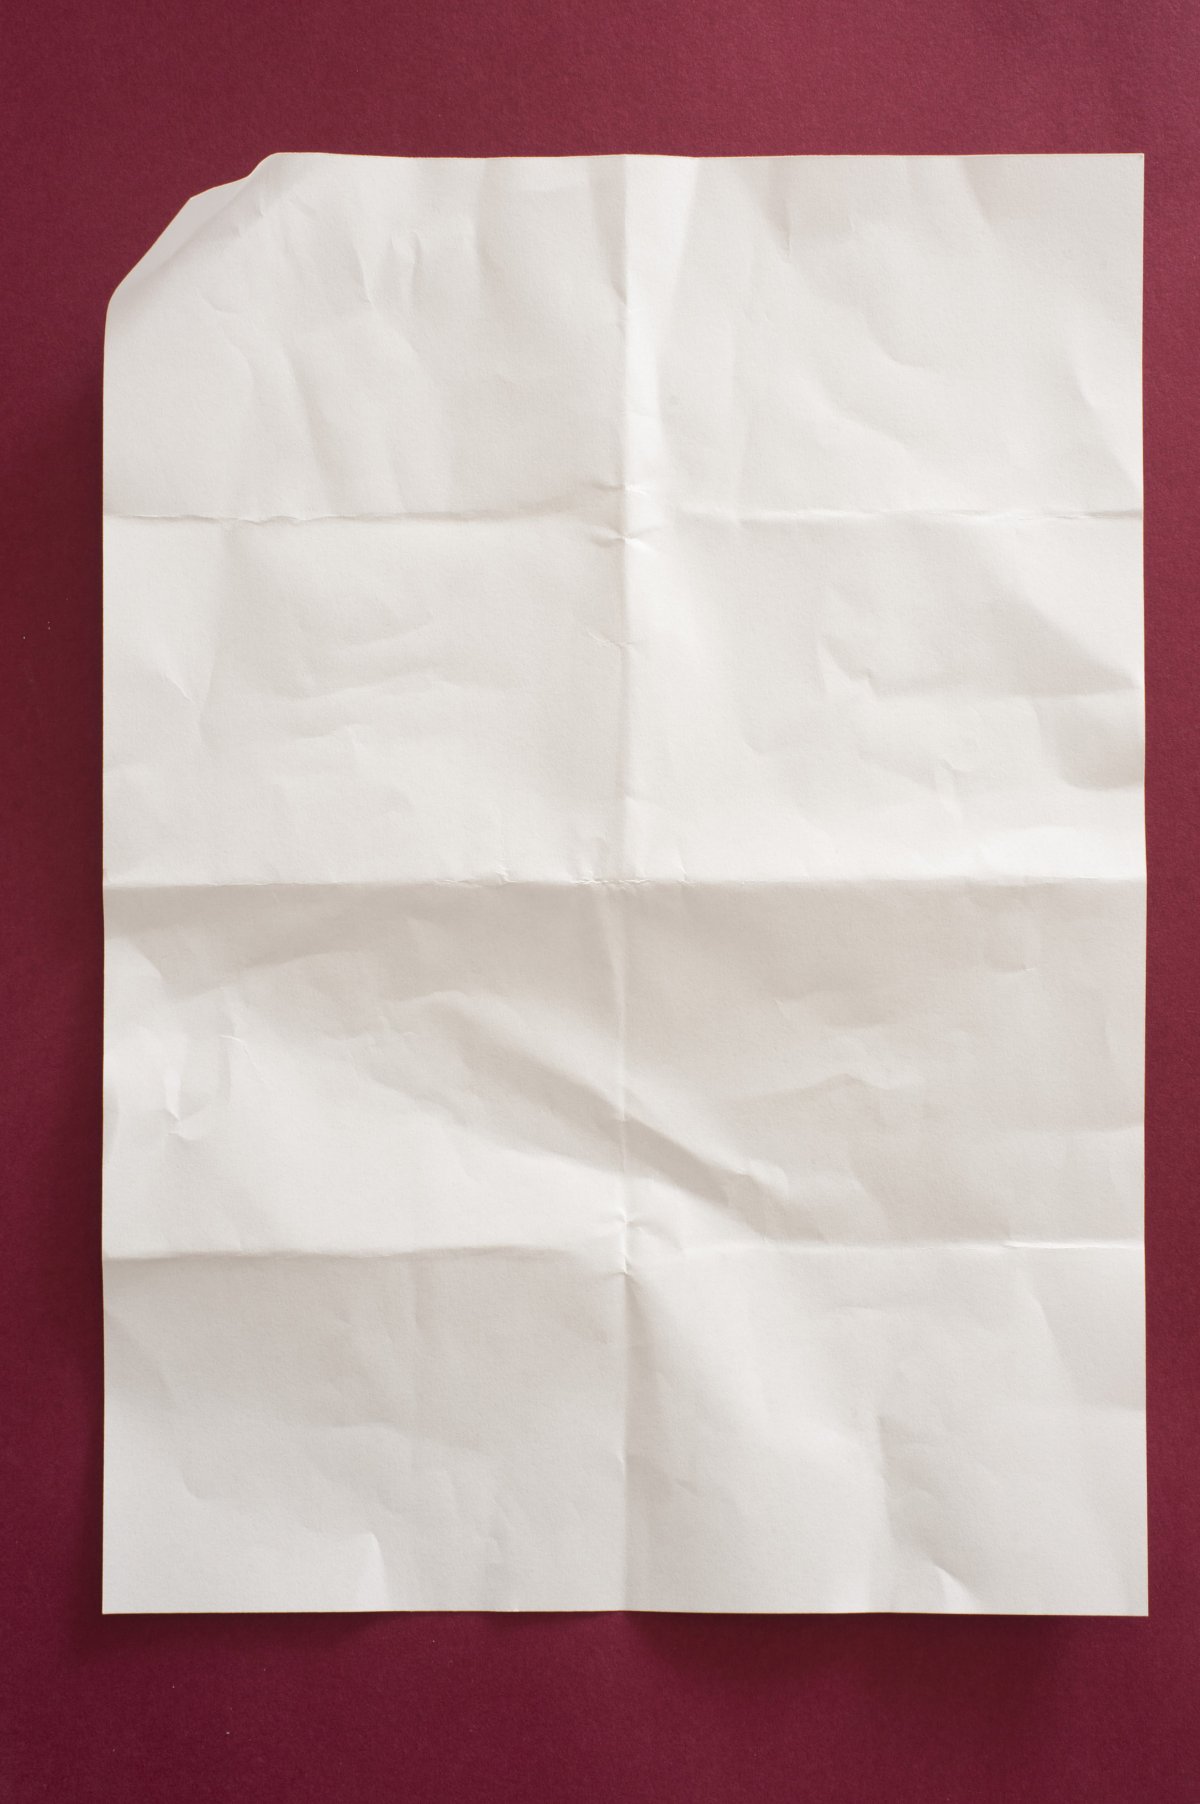 Sheet of paper. Текстурная бумага сложенная. Лист бумаги. Сложенная белая бумага. Бумажный лист.